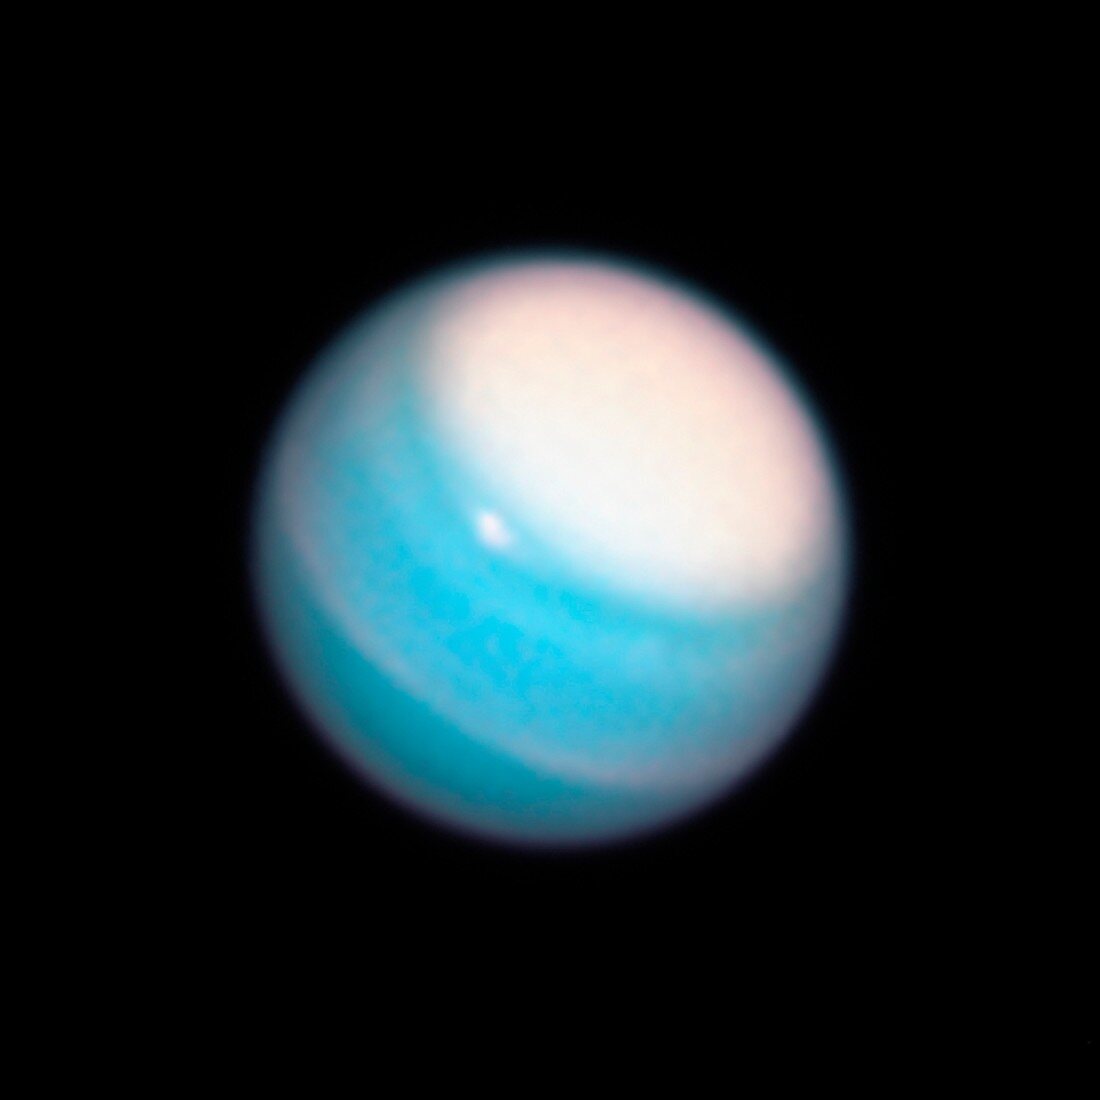 Uranus, Hubble Space Telescope image